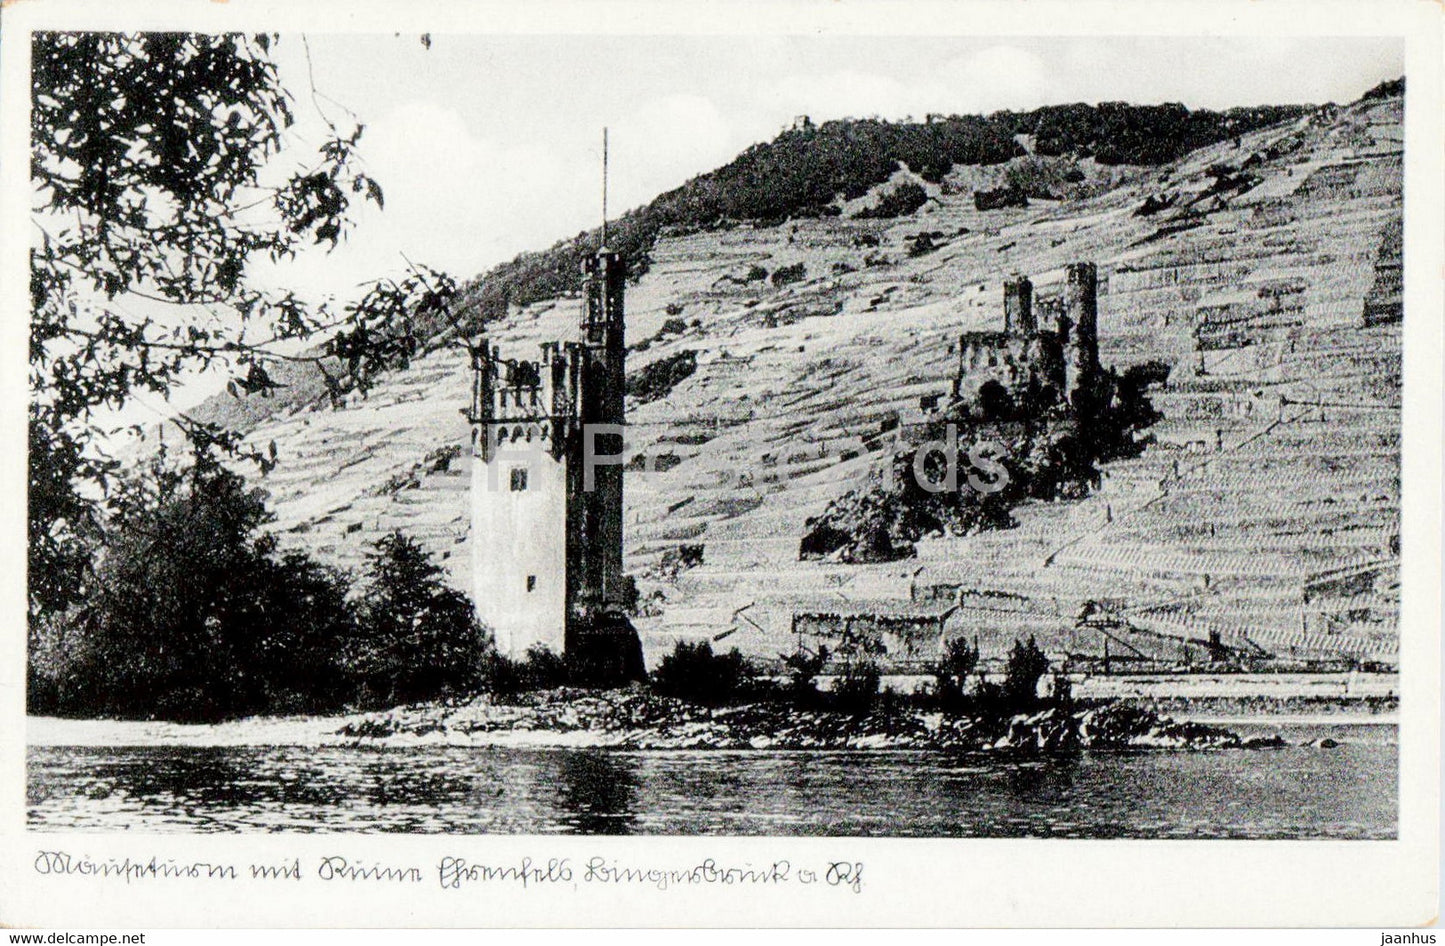 Bingen - Mäuseturm mit Ruine Ehrenfels - old postcard - 1977 - Germany - used - JH Postcards